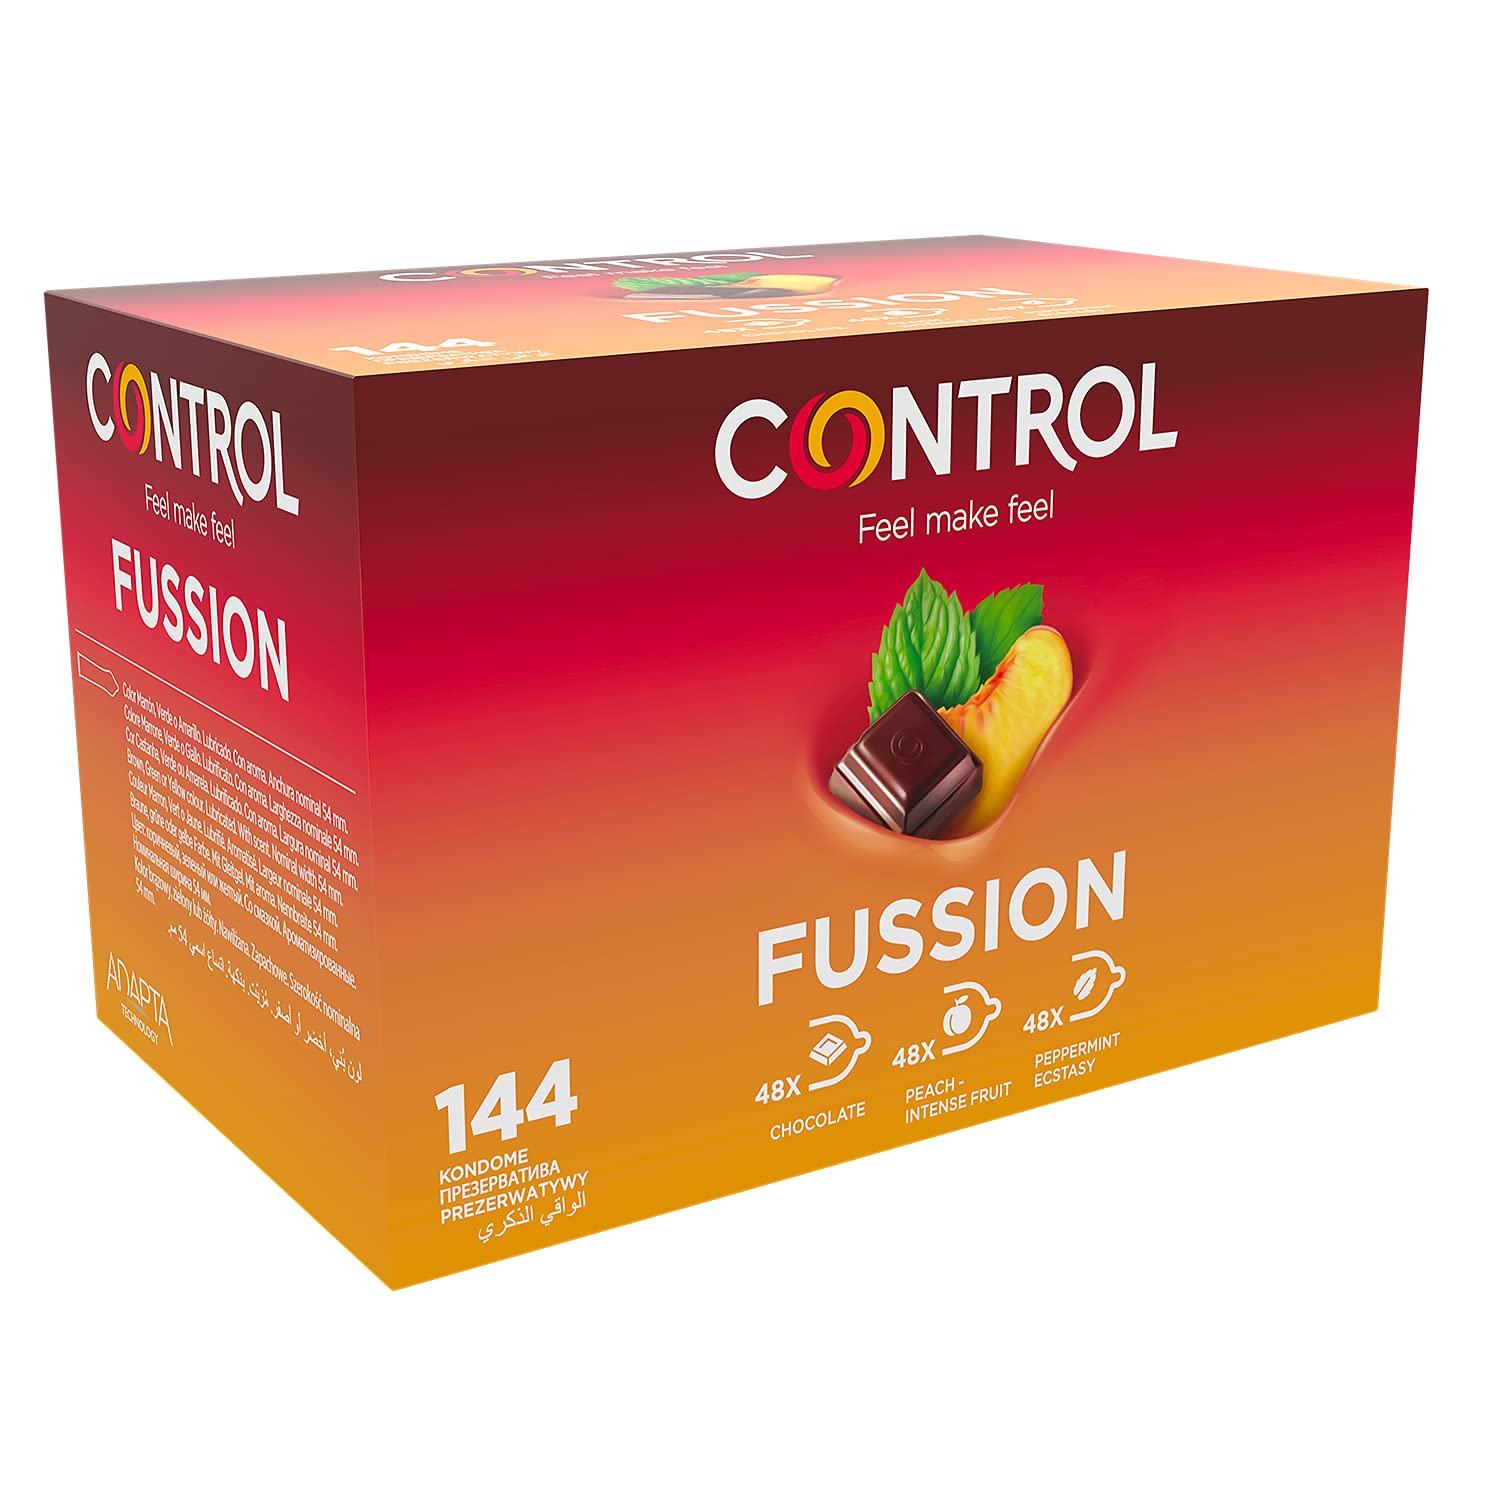 CONTROL FUSSION Naturlatex-Kondome mit verschiedenen Geschmacksrichtungen - 144 Stück